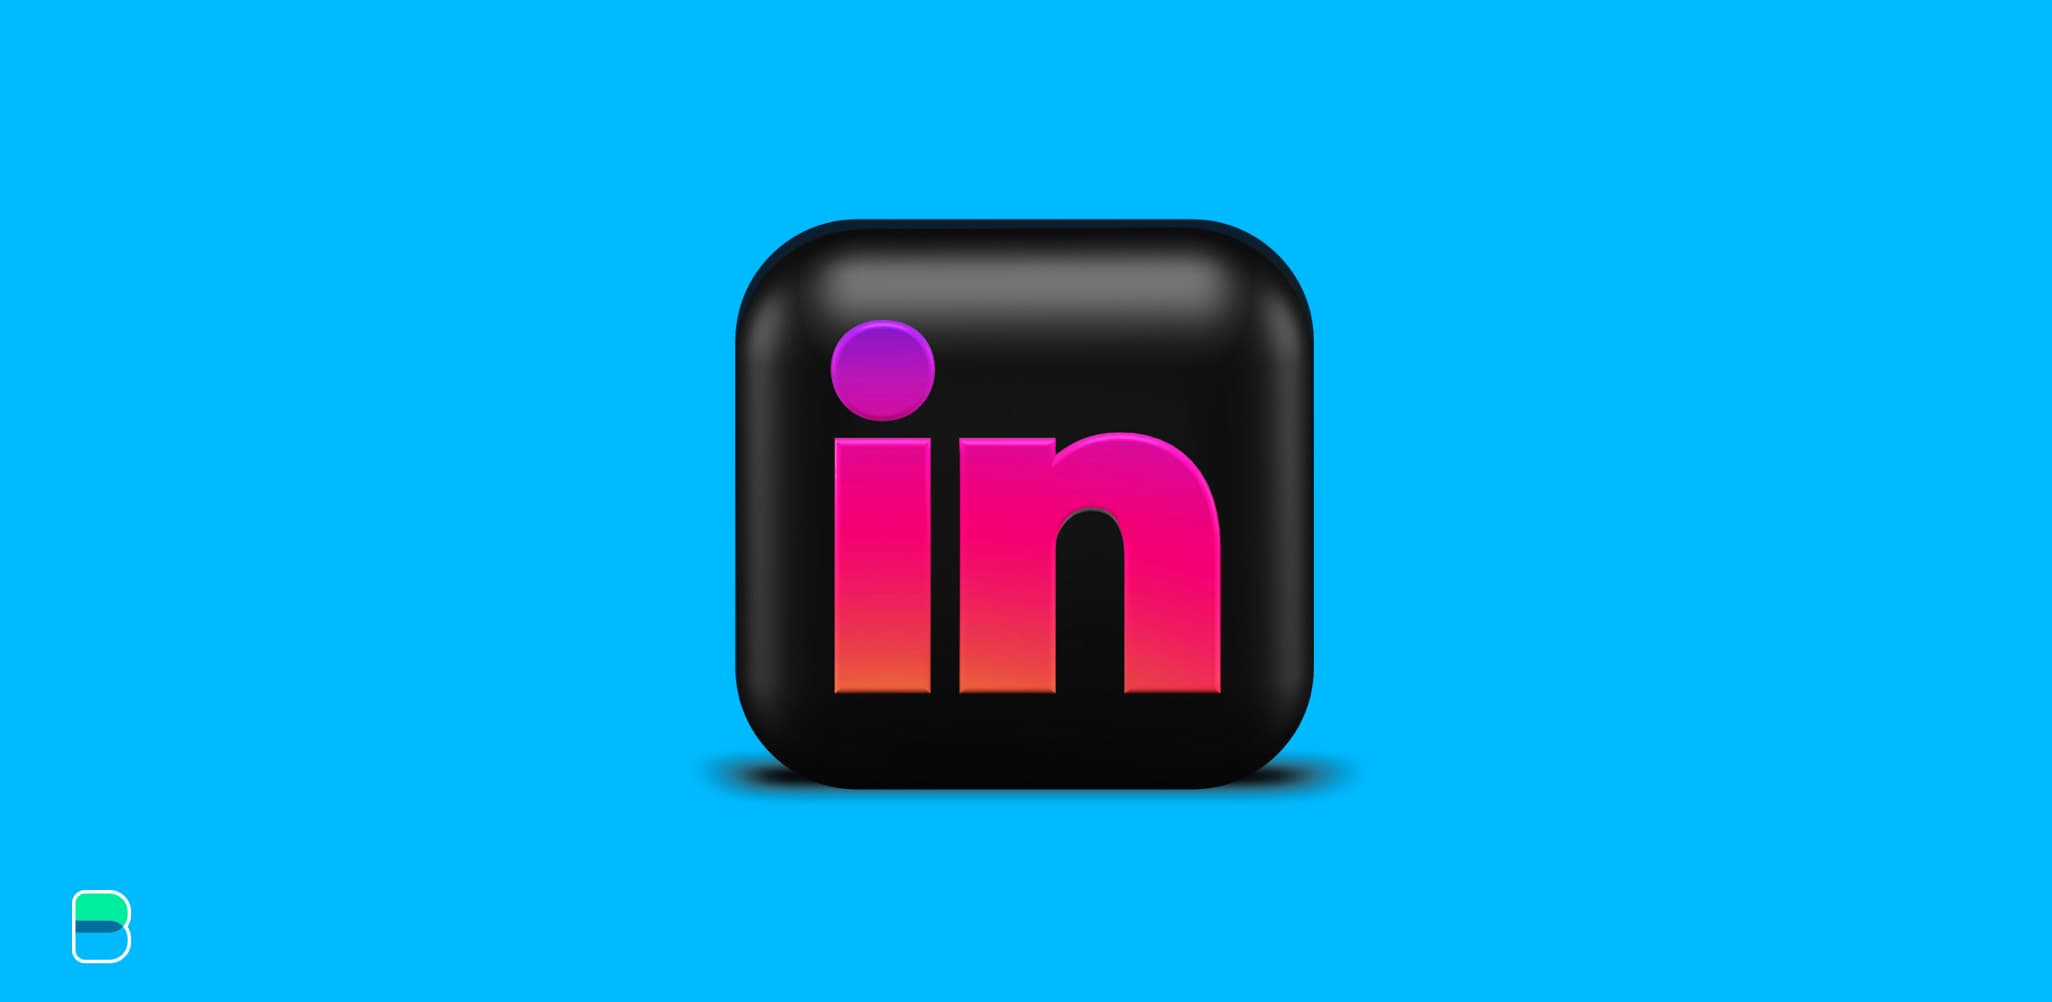 LinkedIn wants to be Instagram, or even TikTok